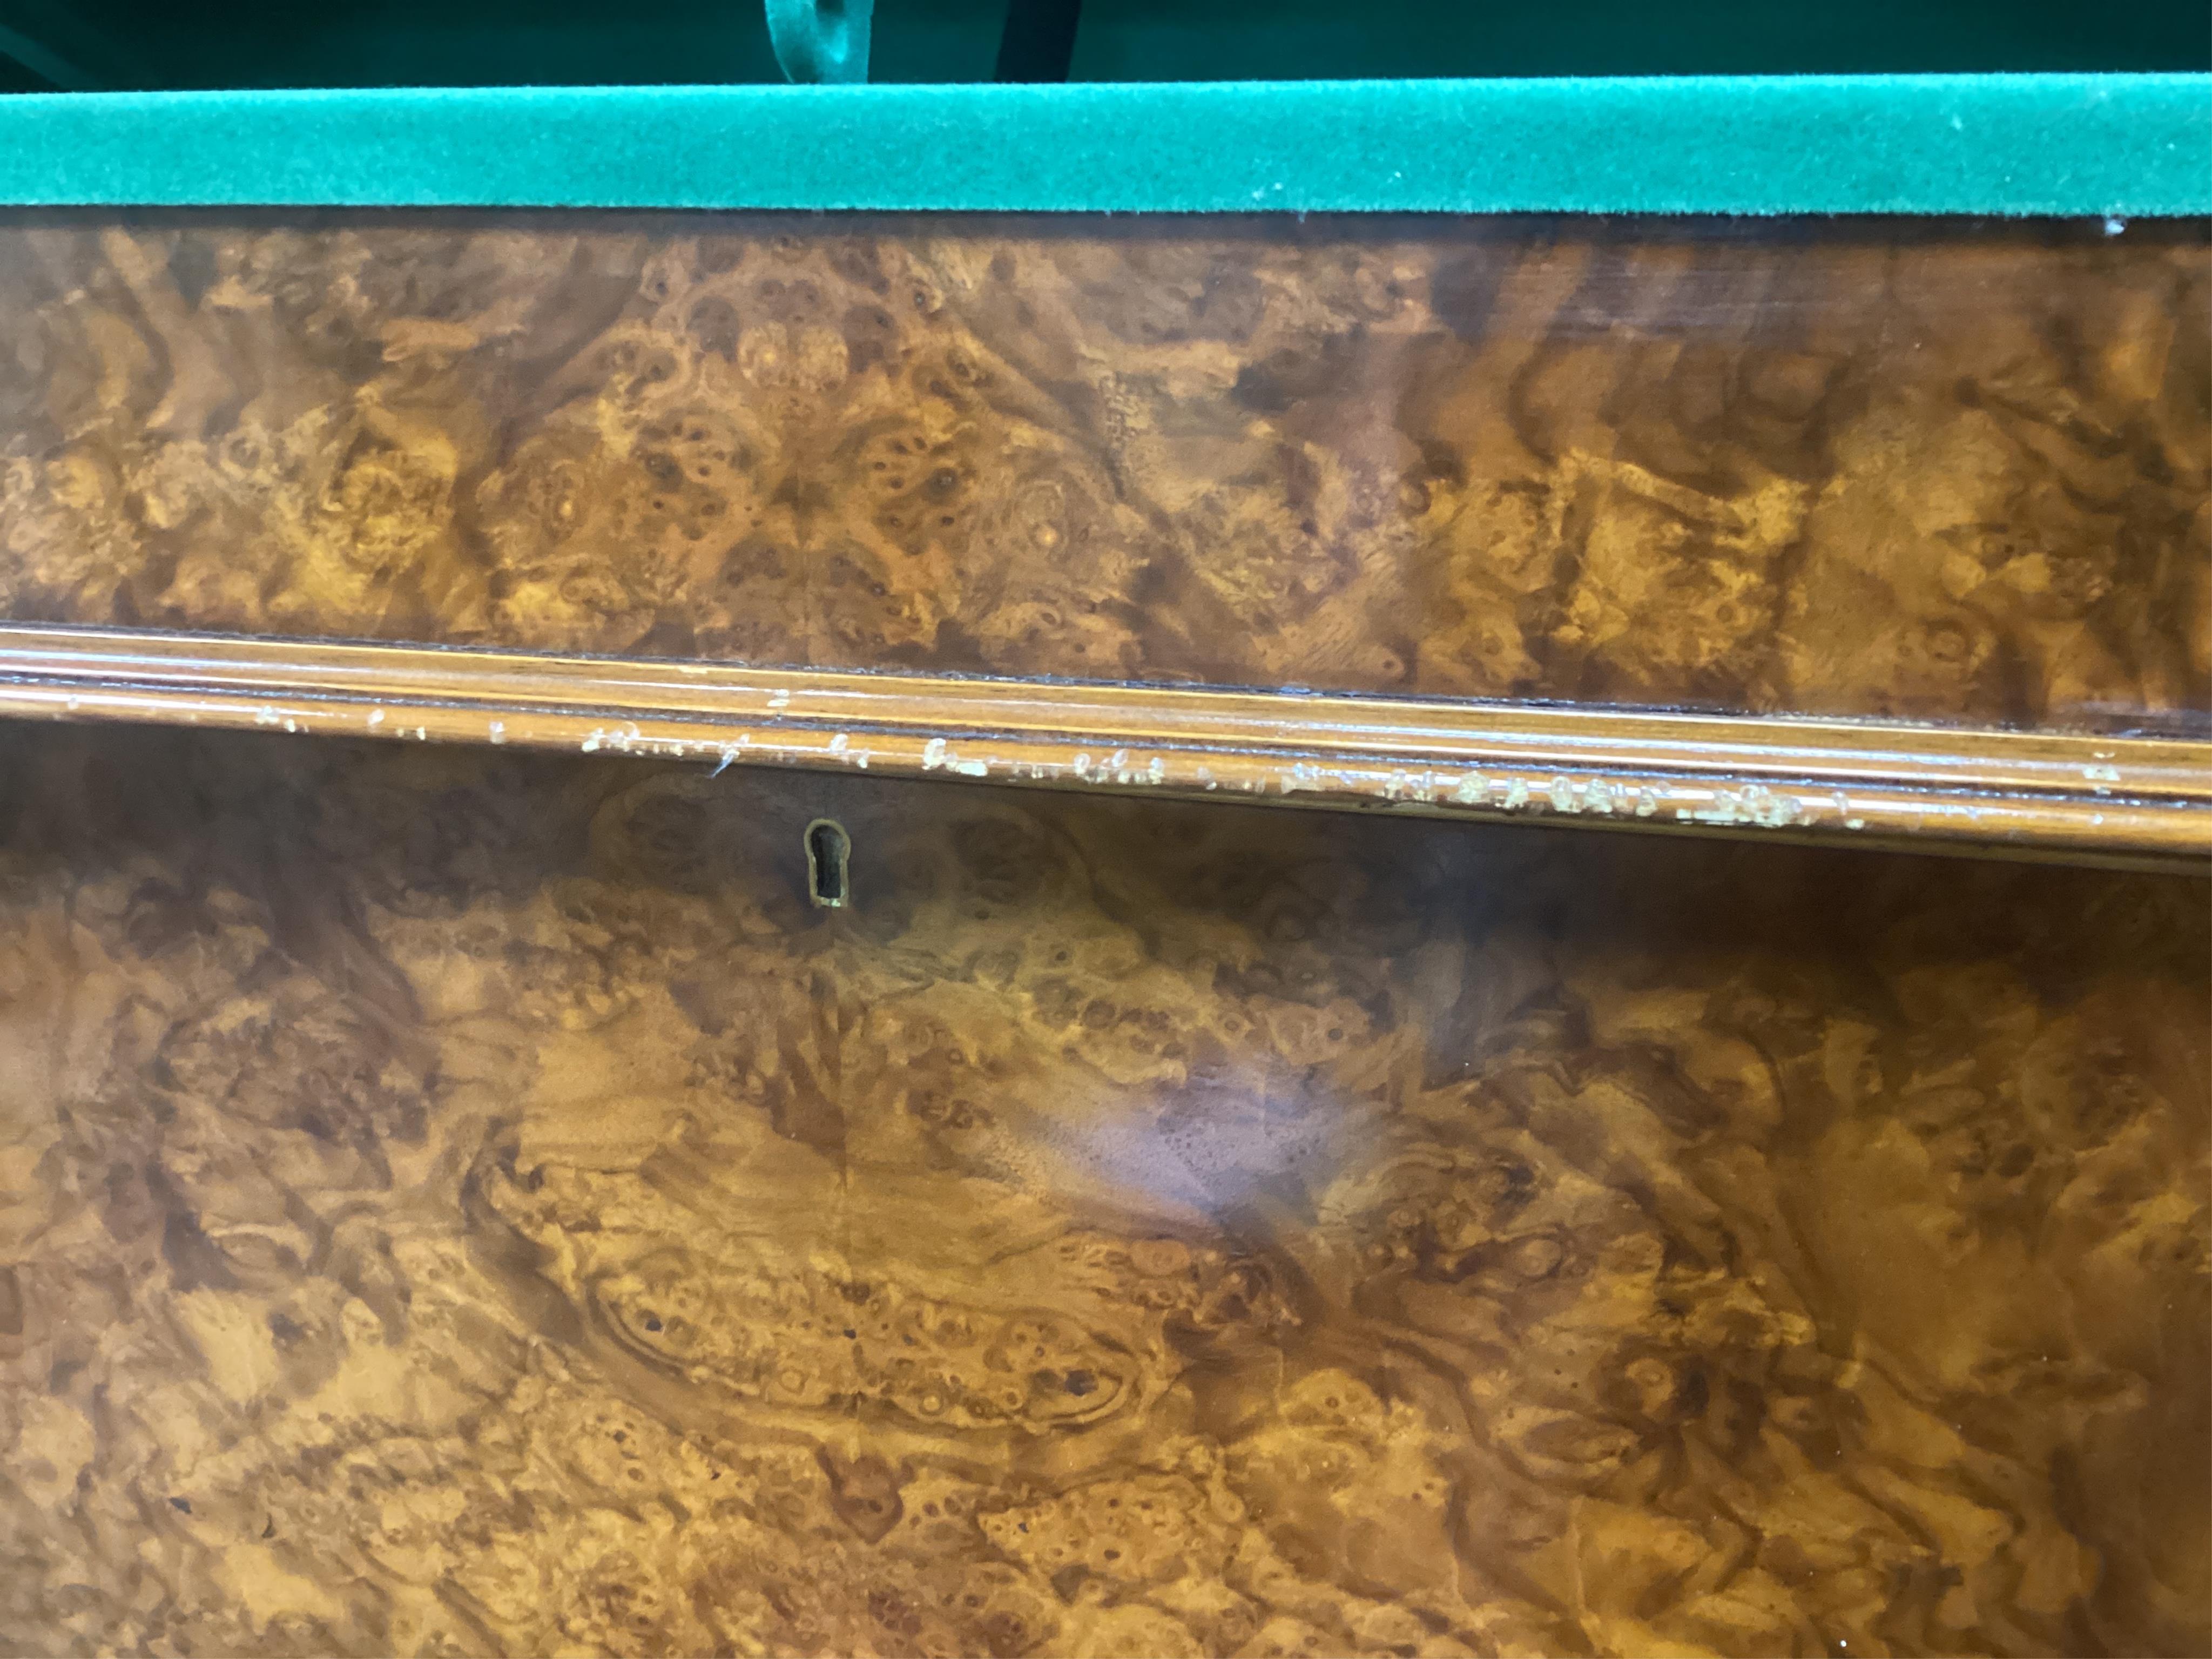 A reproduction burr walnut gun cabinet, width 84cm, depth 40cm, height 157cm. Condition - fair